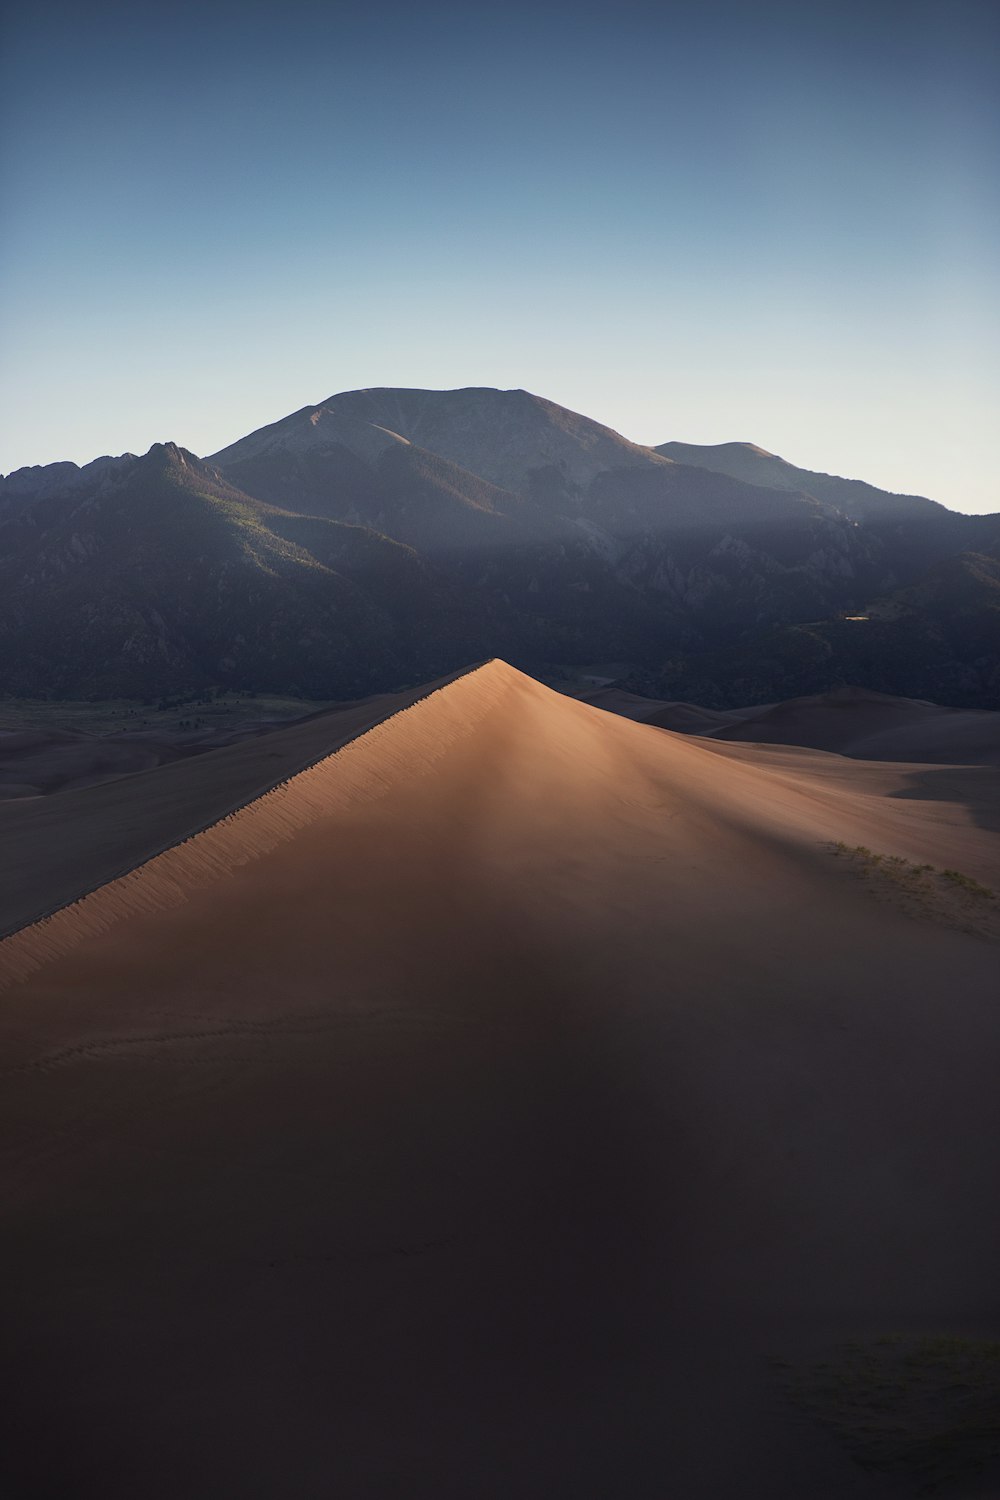 brown sand dunes near mountains during daytime